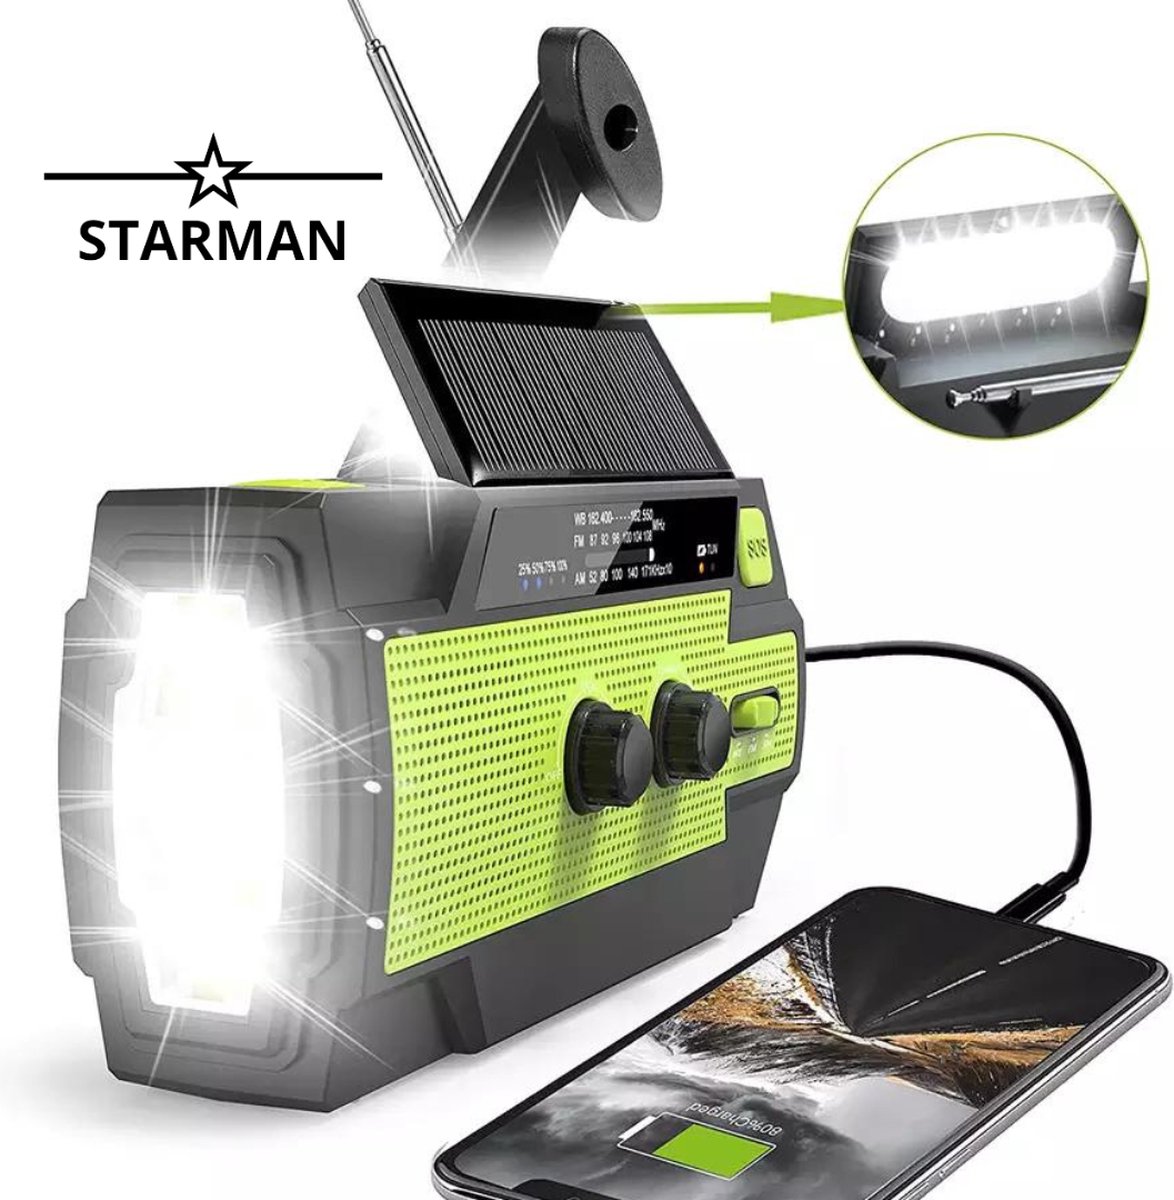 STARMAN Noodradio - Opwindbare radio - Noodradio dynamo solar - Noodradio opwindbaar - Noodradio zaklamp/Powerbank - Survival radio - Inclusief opbergzak - Groen